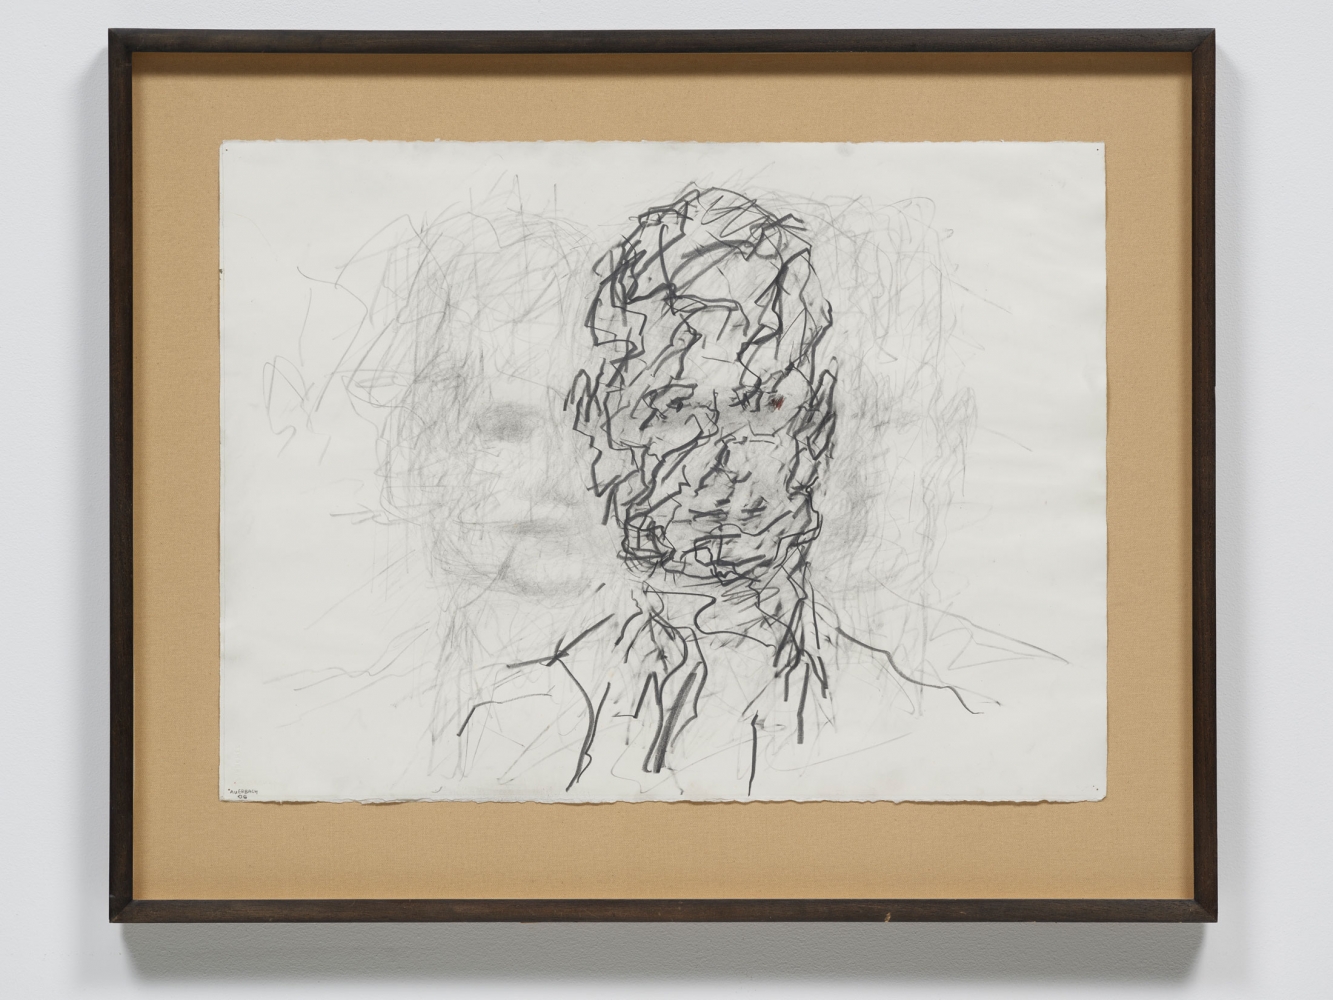 Frank Auerbach
Head of David Landau, 2006
Pencil and graphite on paper
22 1/2 x 30 1/4 inches
(57.2 x 76.8 cm)

Private Collection, Devon